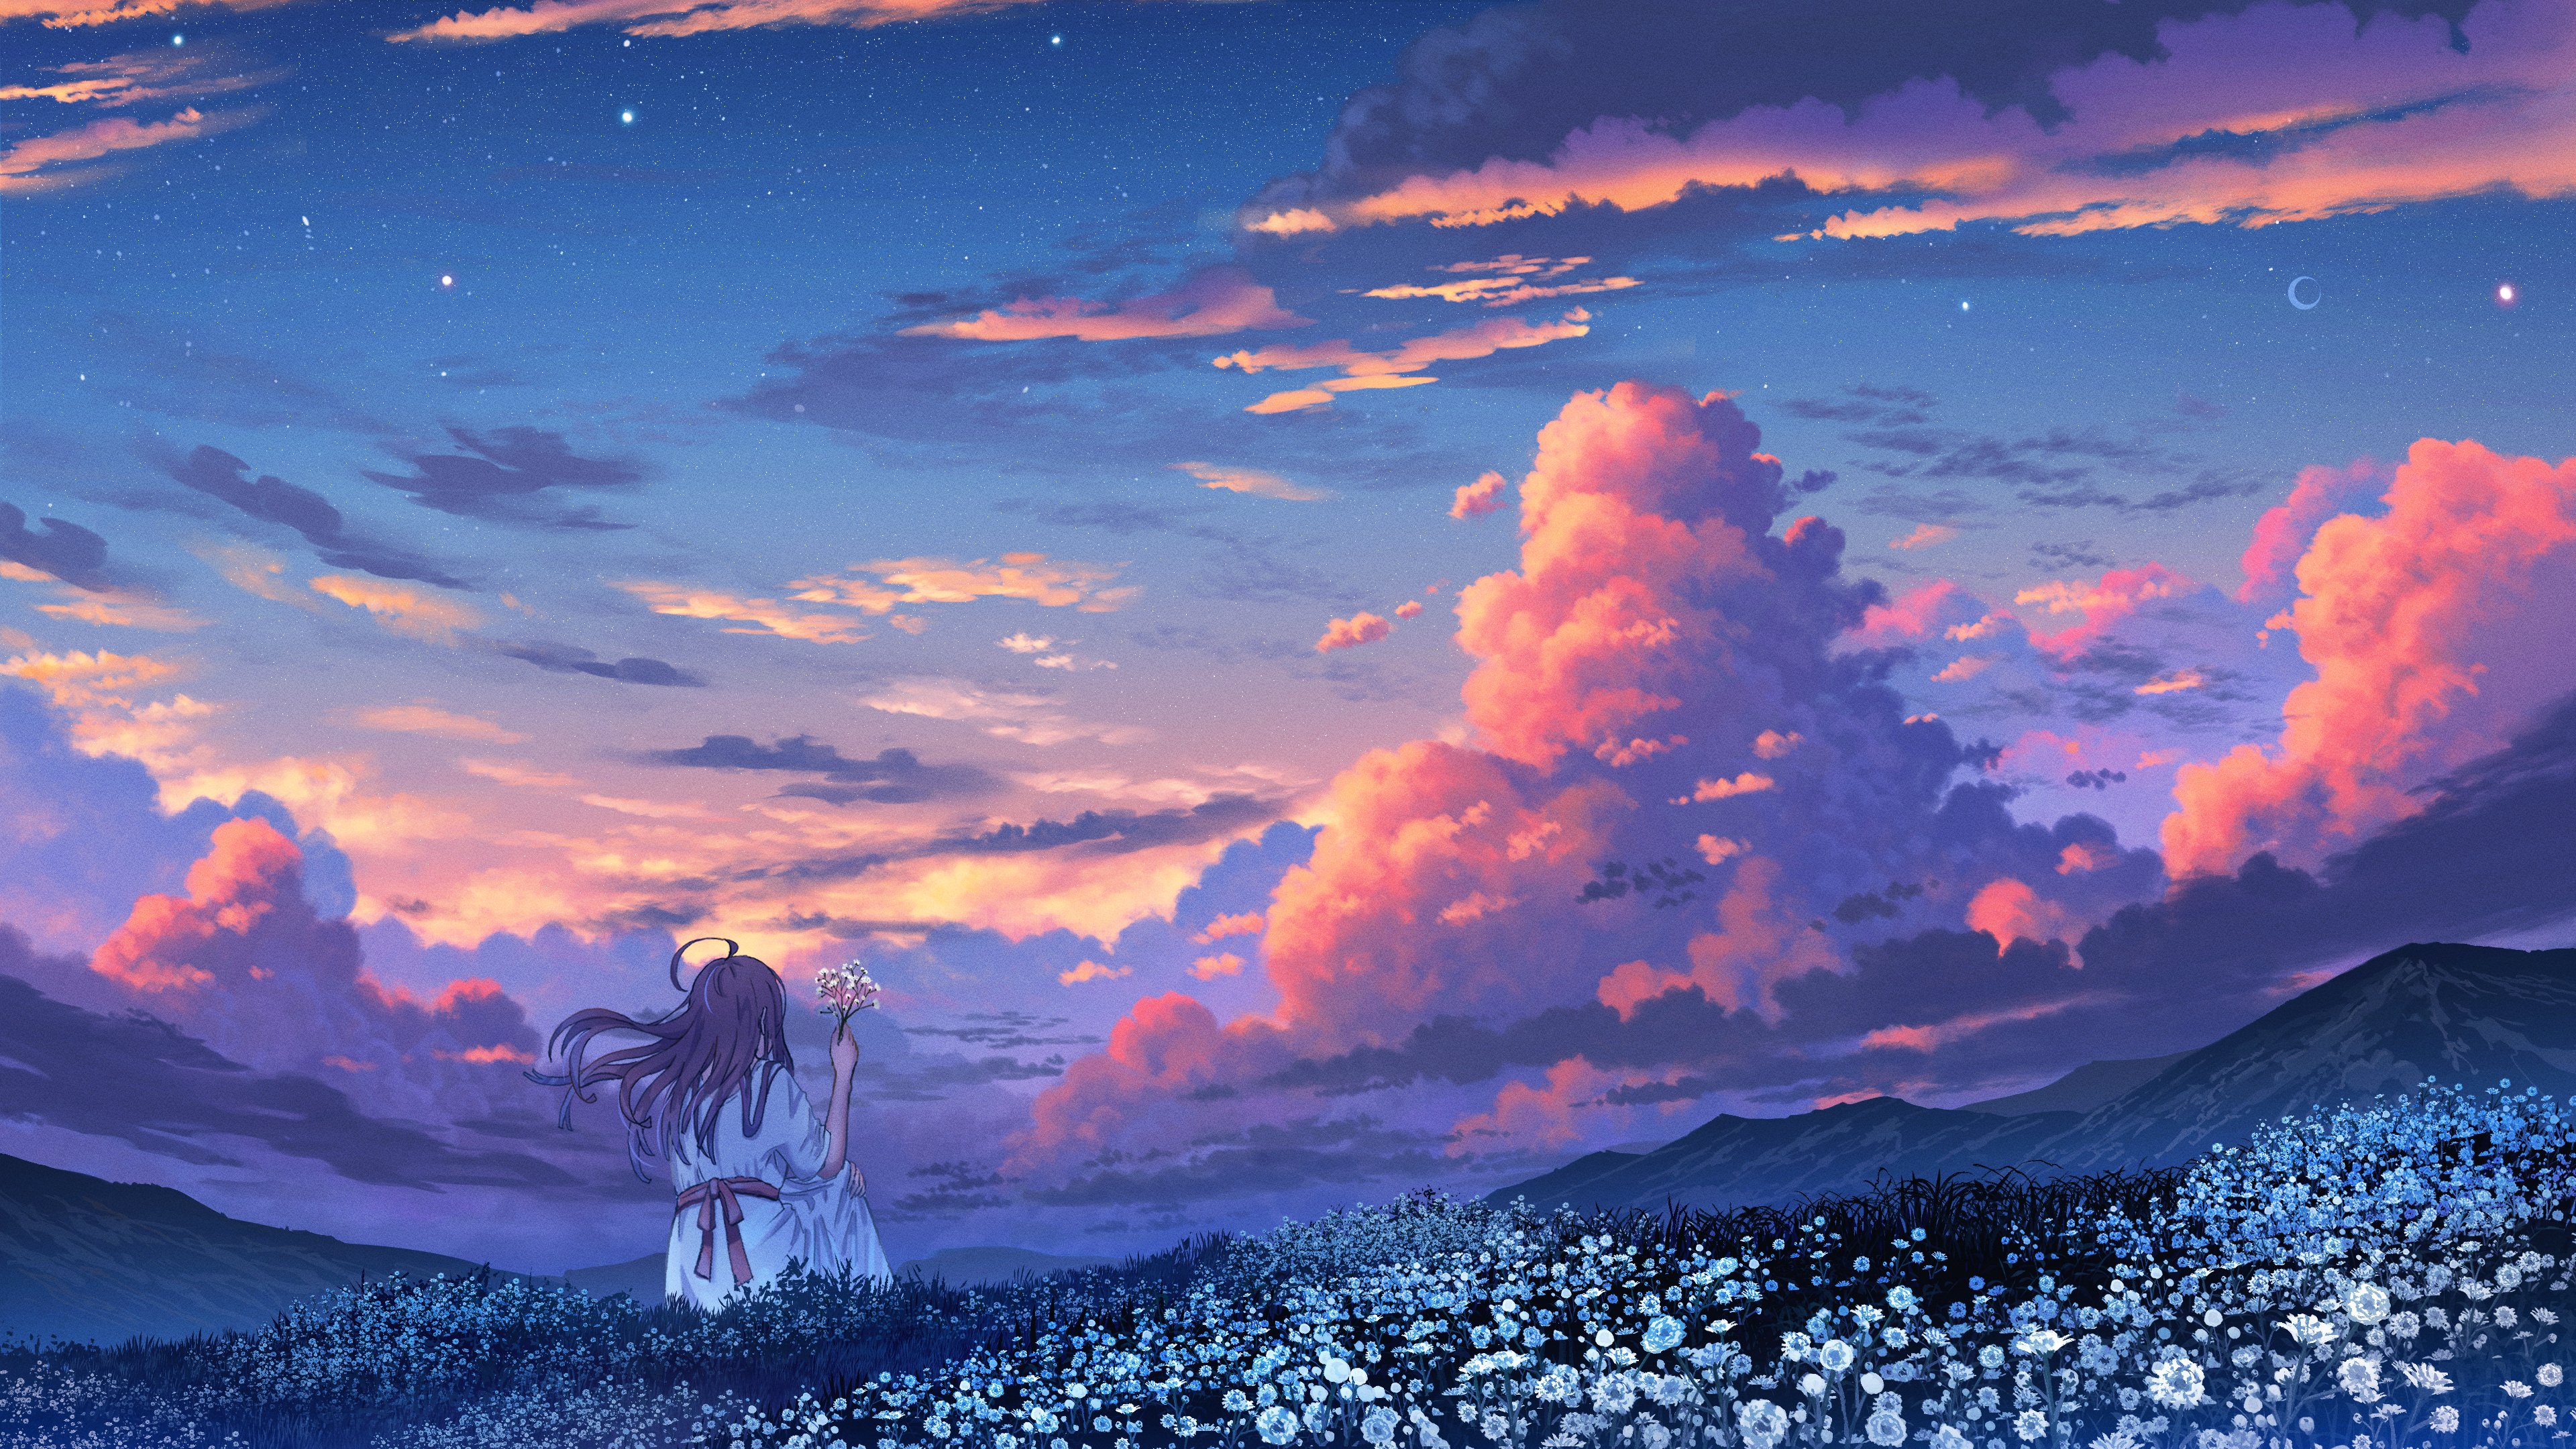 Digital Painting Digital Art Clouds Field Looking Away Sitting Flowers Grass Peaceful Sky Moon Cresc 3840x2160